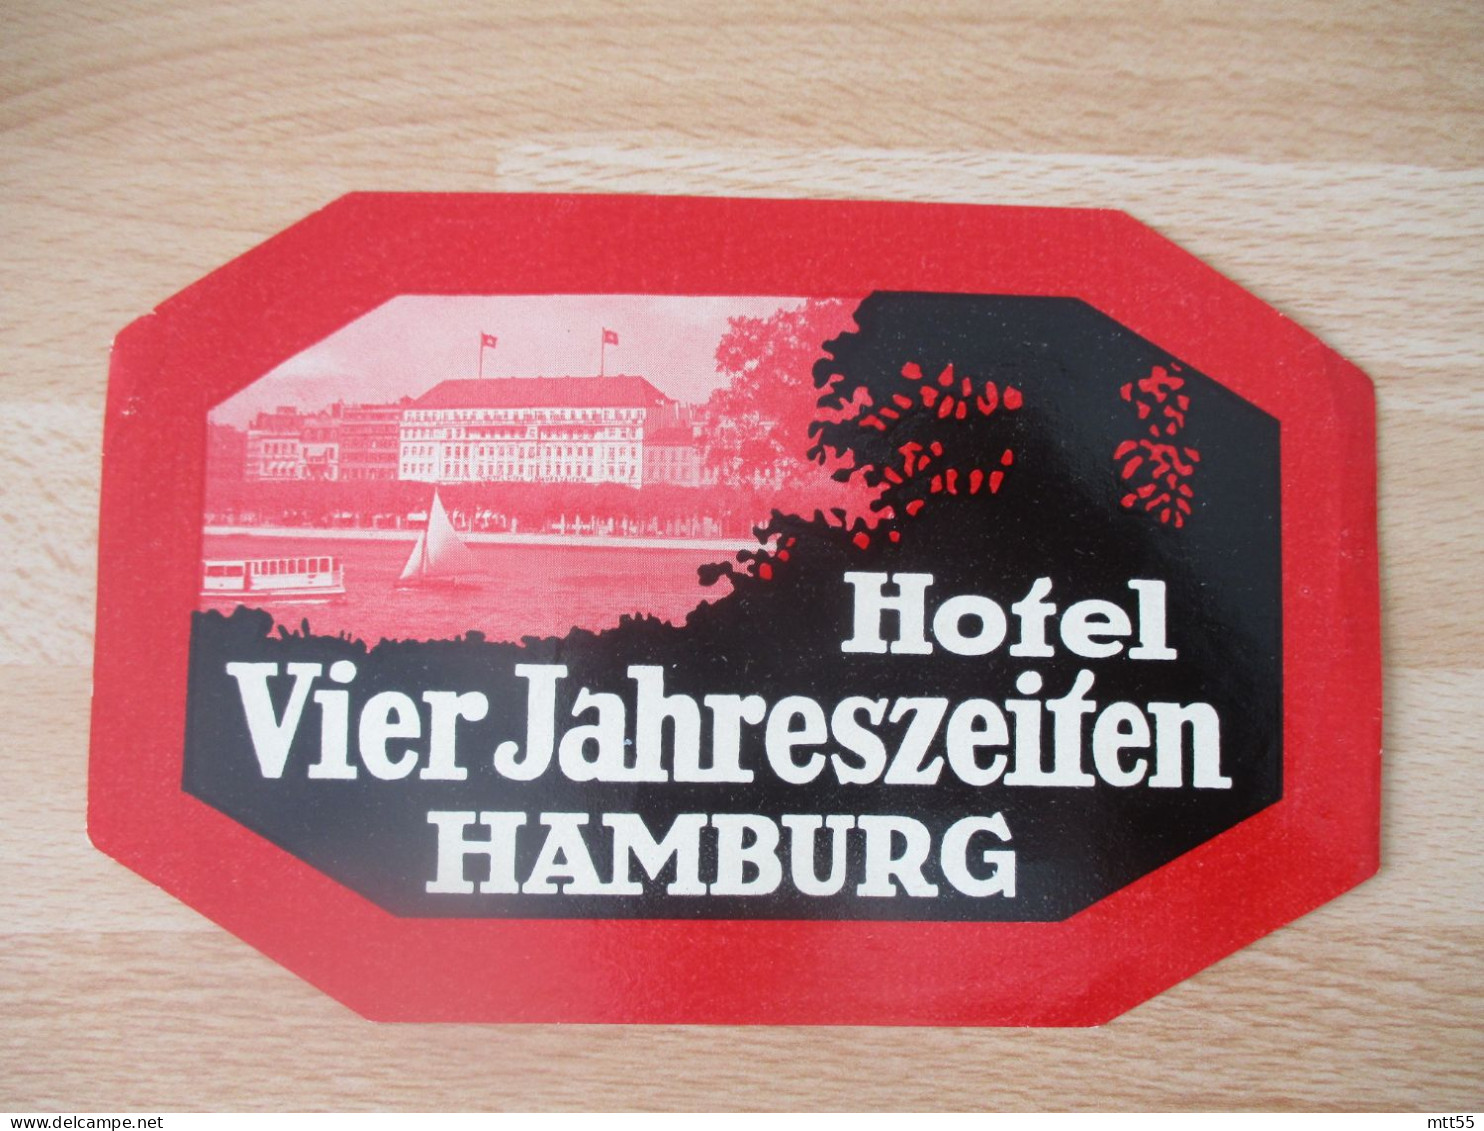 HAMBURG HAMBOURG HOTEL VIER JAHNRESZEIIEN  ETIQUETTE HOTEL - Etiquettes D'hotels